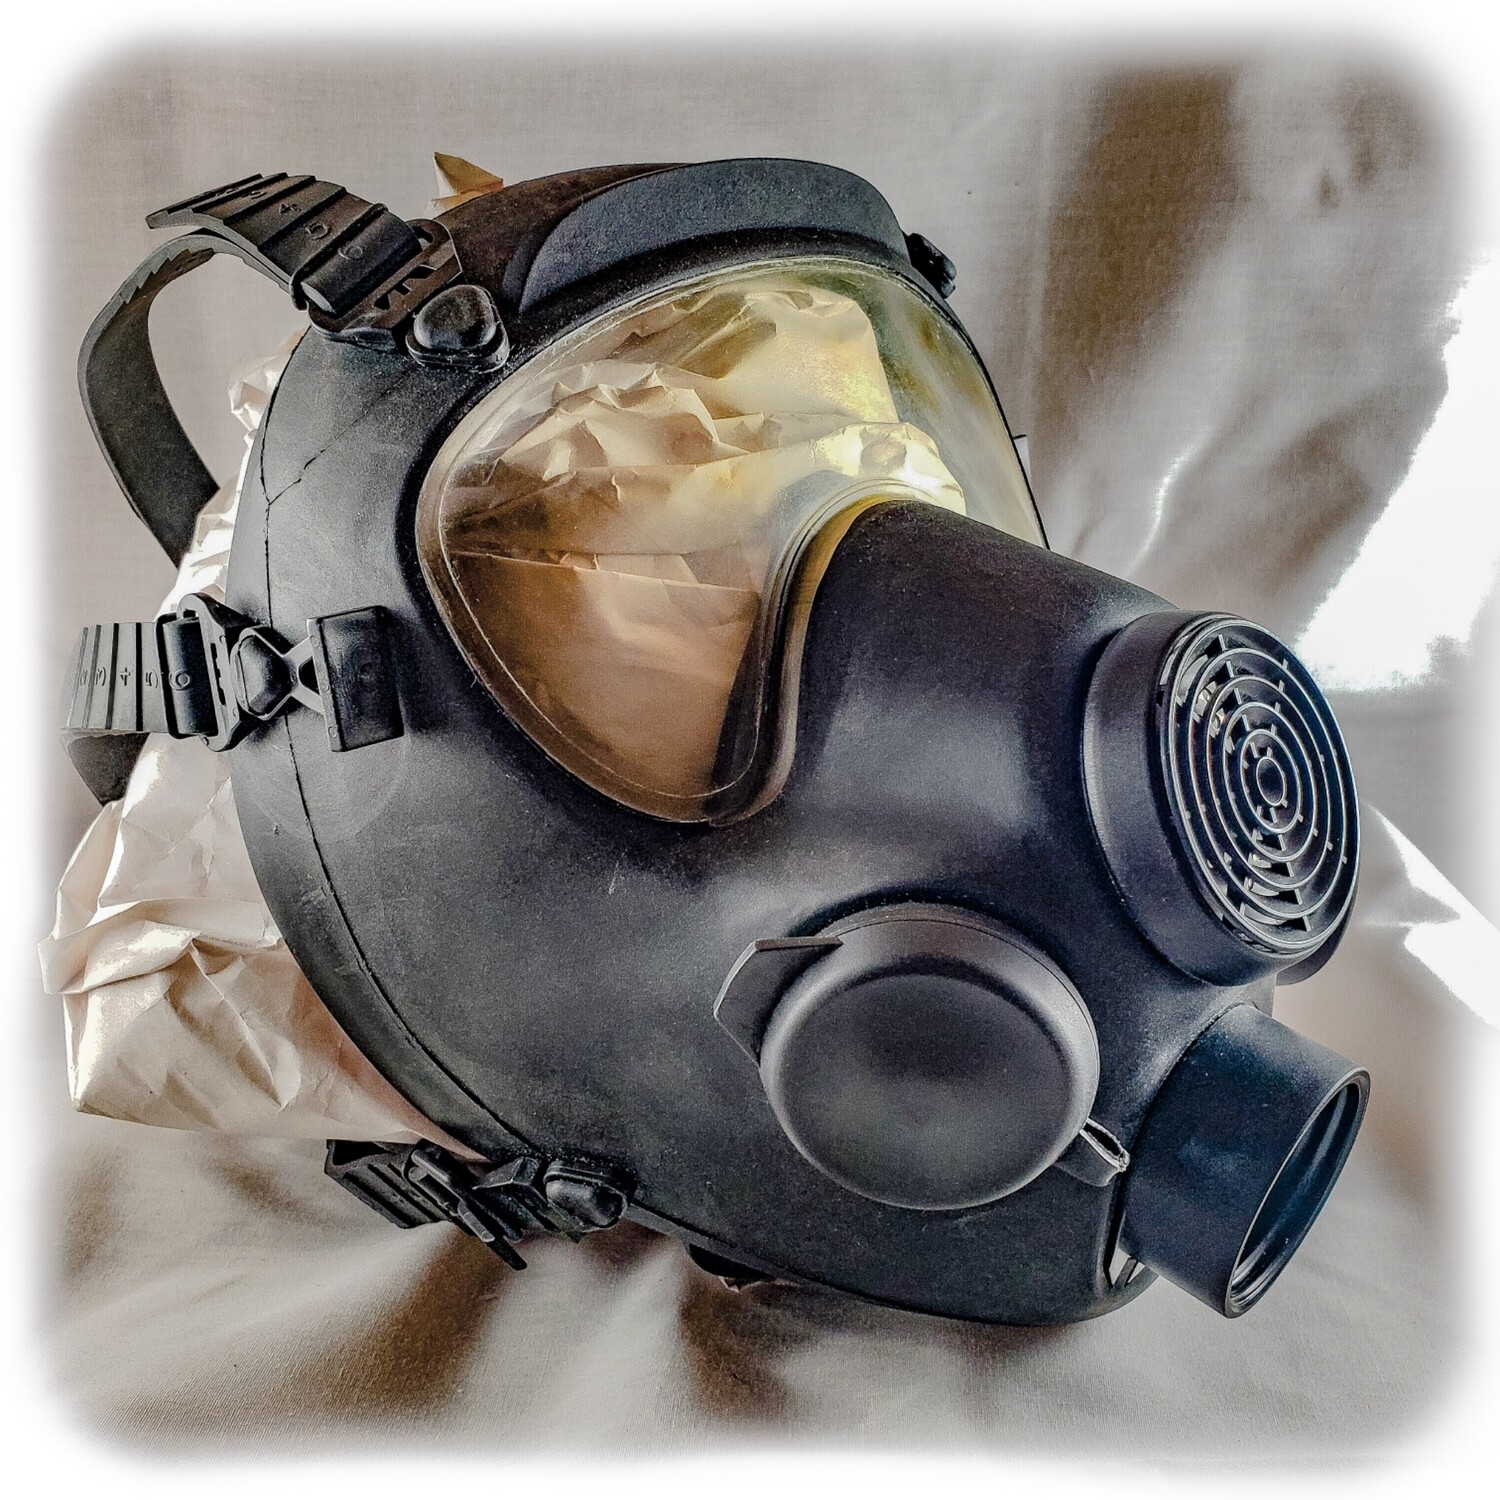 Polish mp5 gas mask